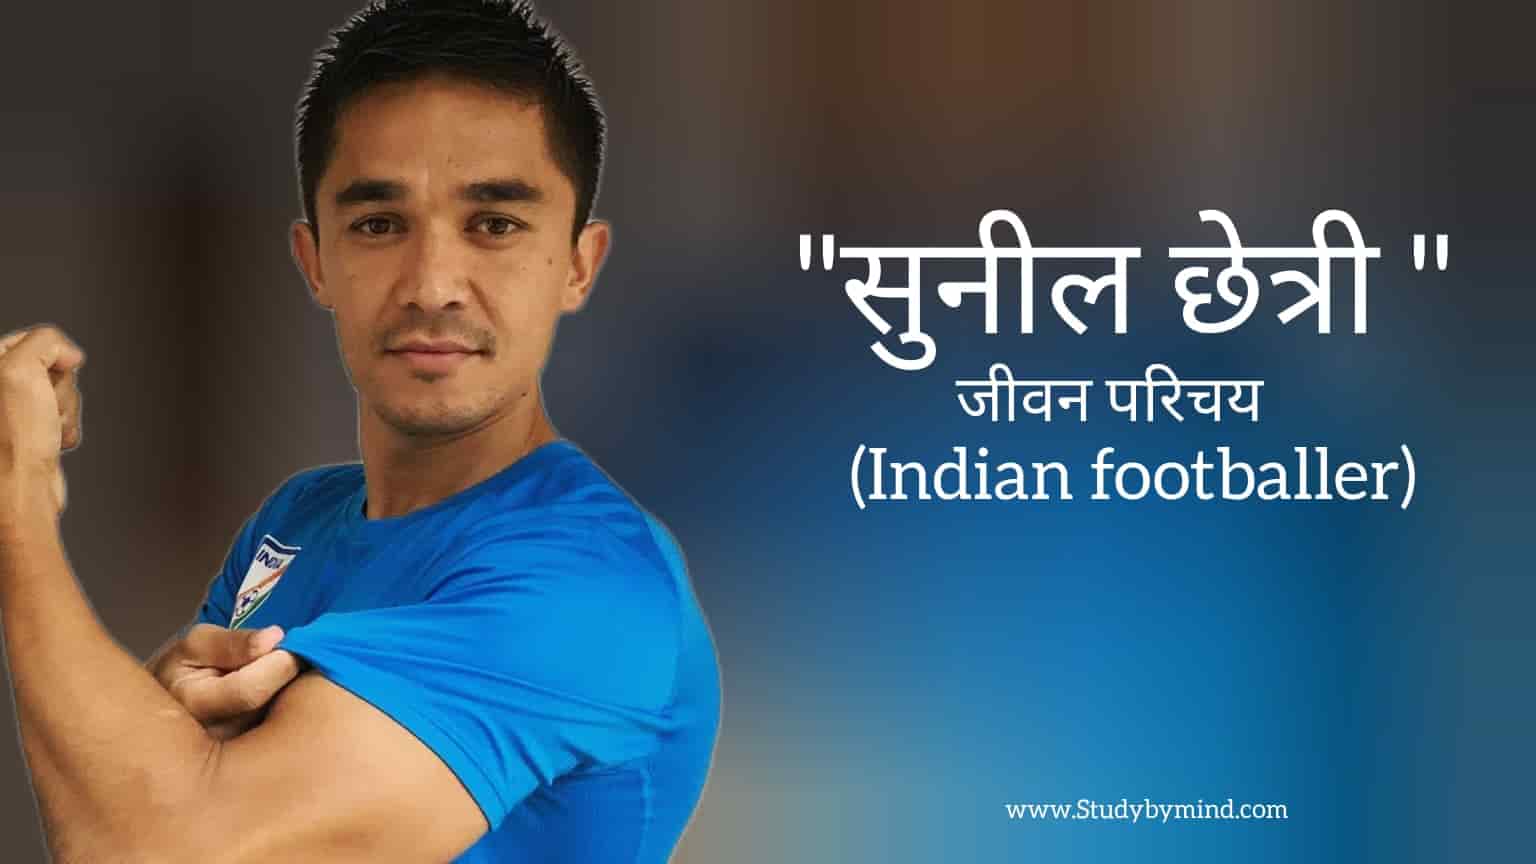 You are currently viewing सुनील छेत्री जीवन परिचय Sunil chhetri biography in hindi (Indian footballer)